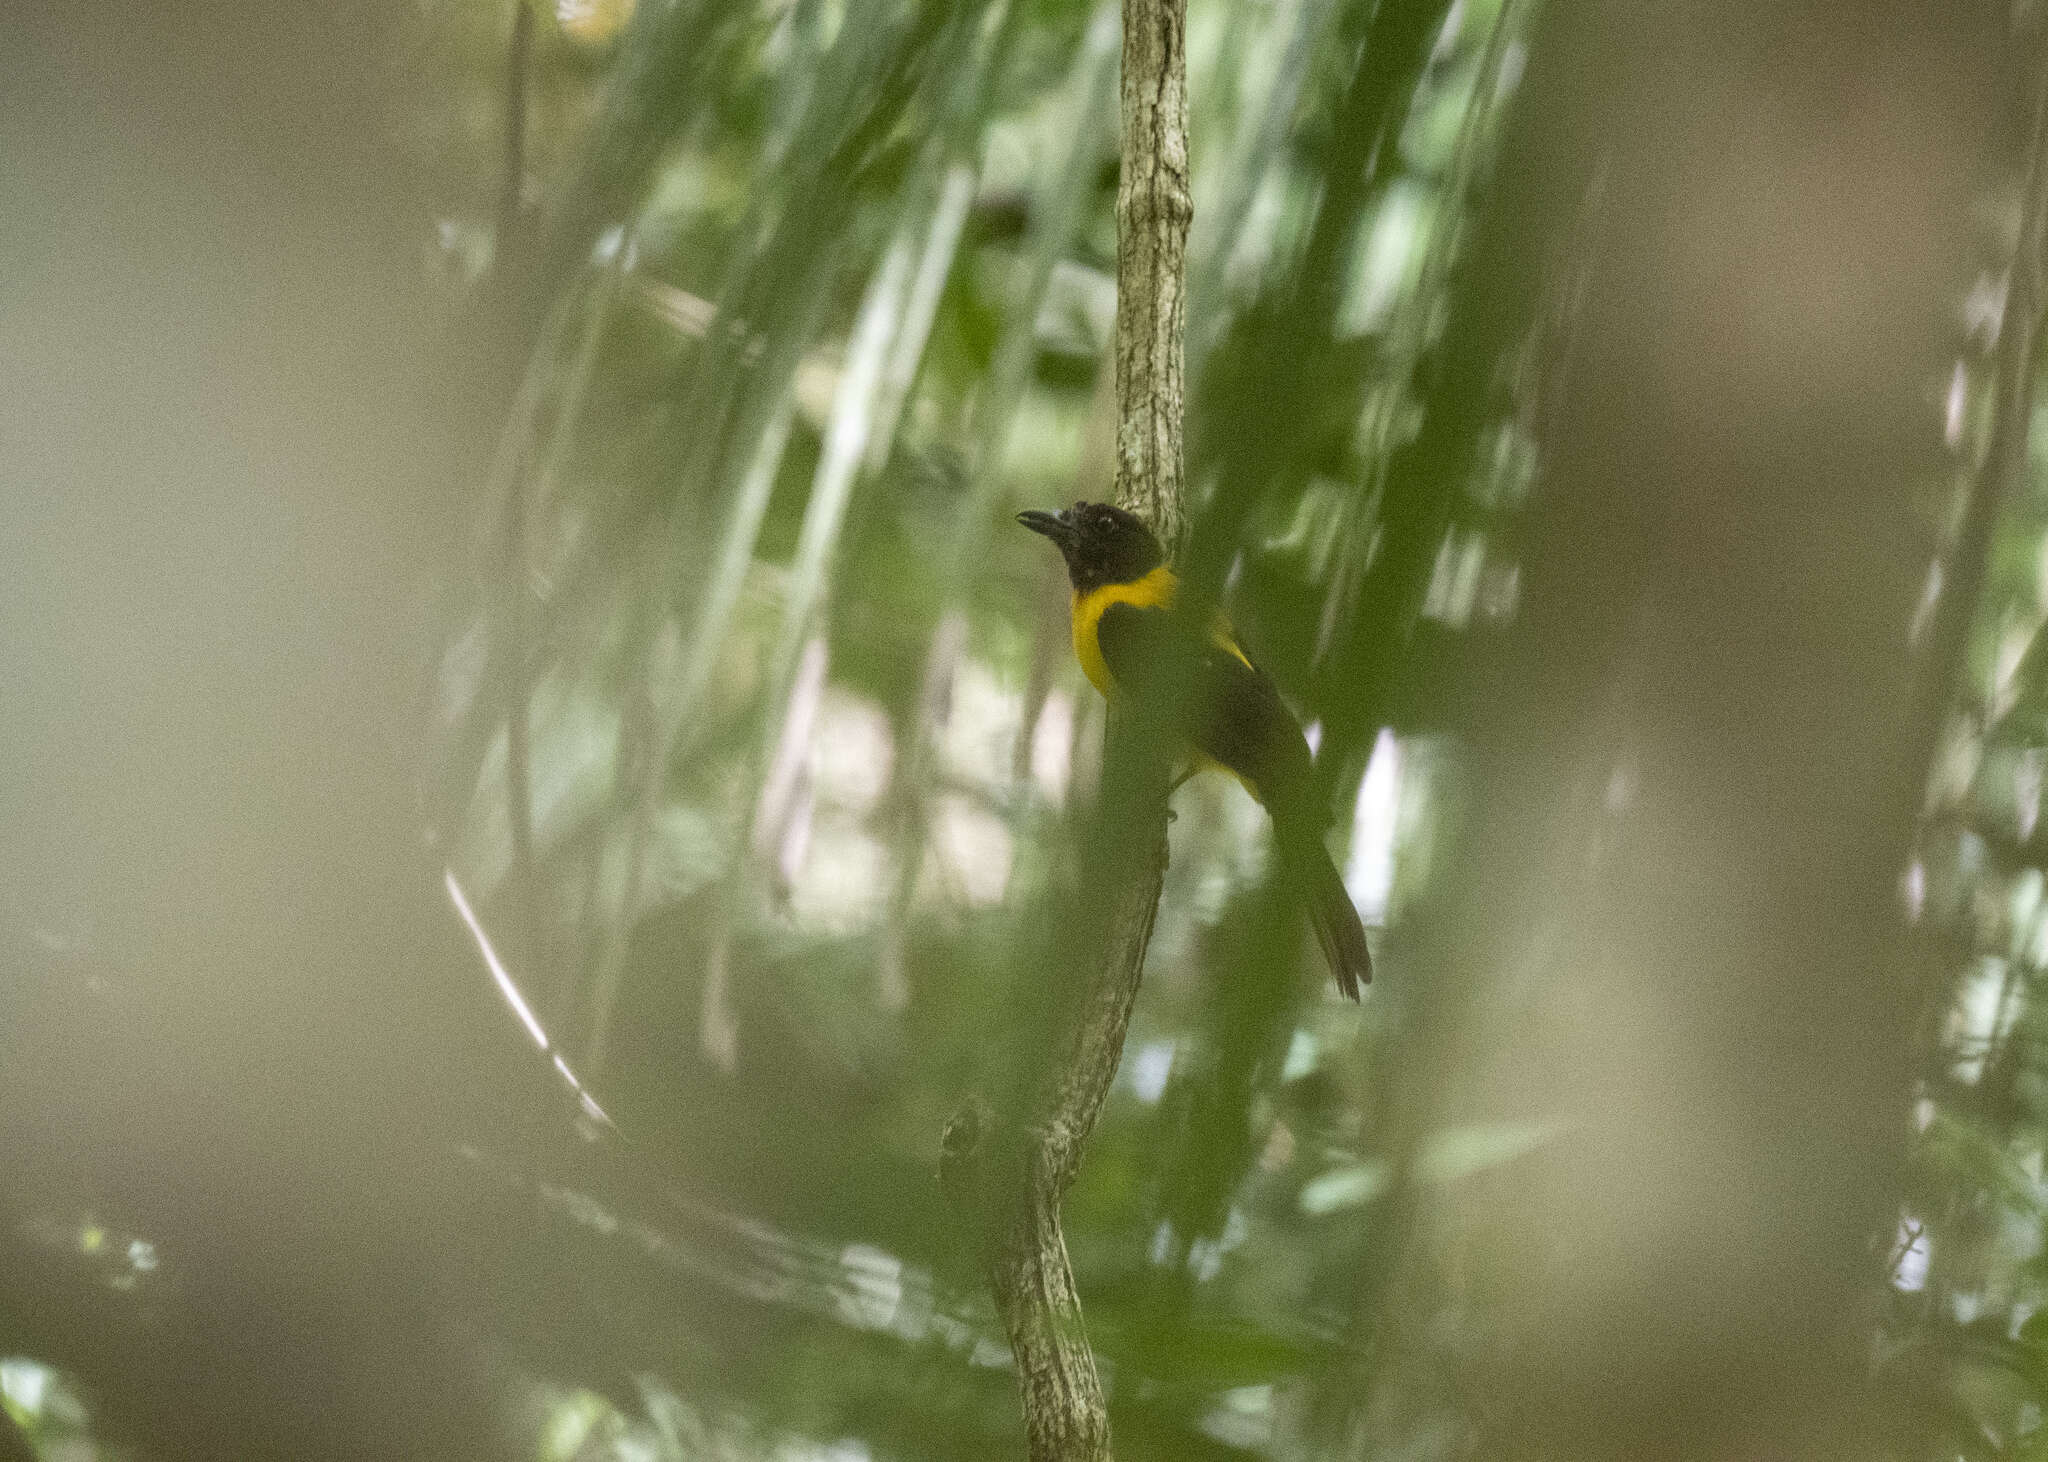 Image of Black-throated Shrike-Tanager